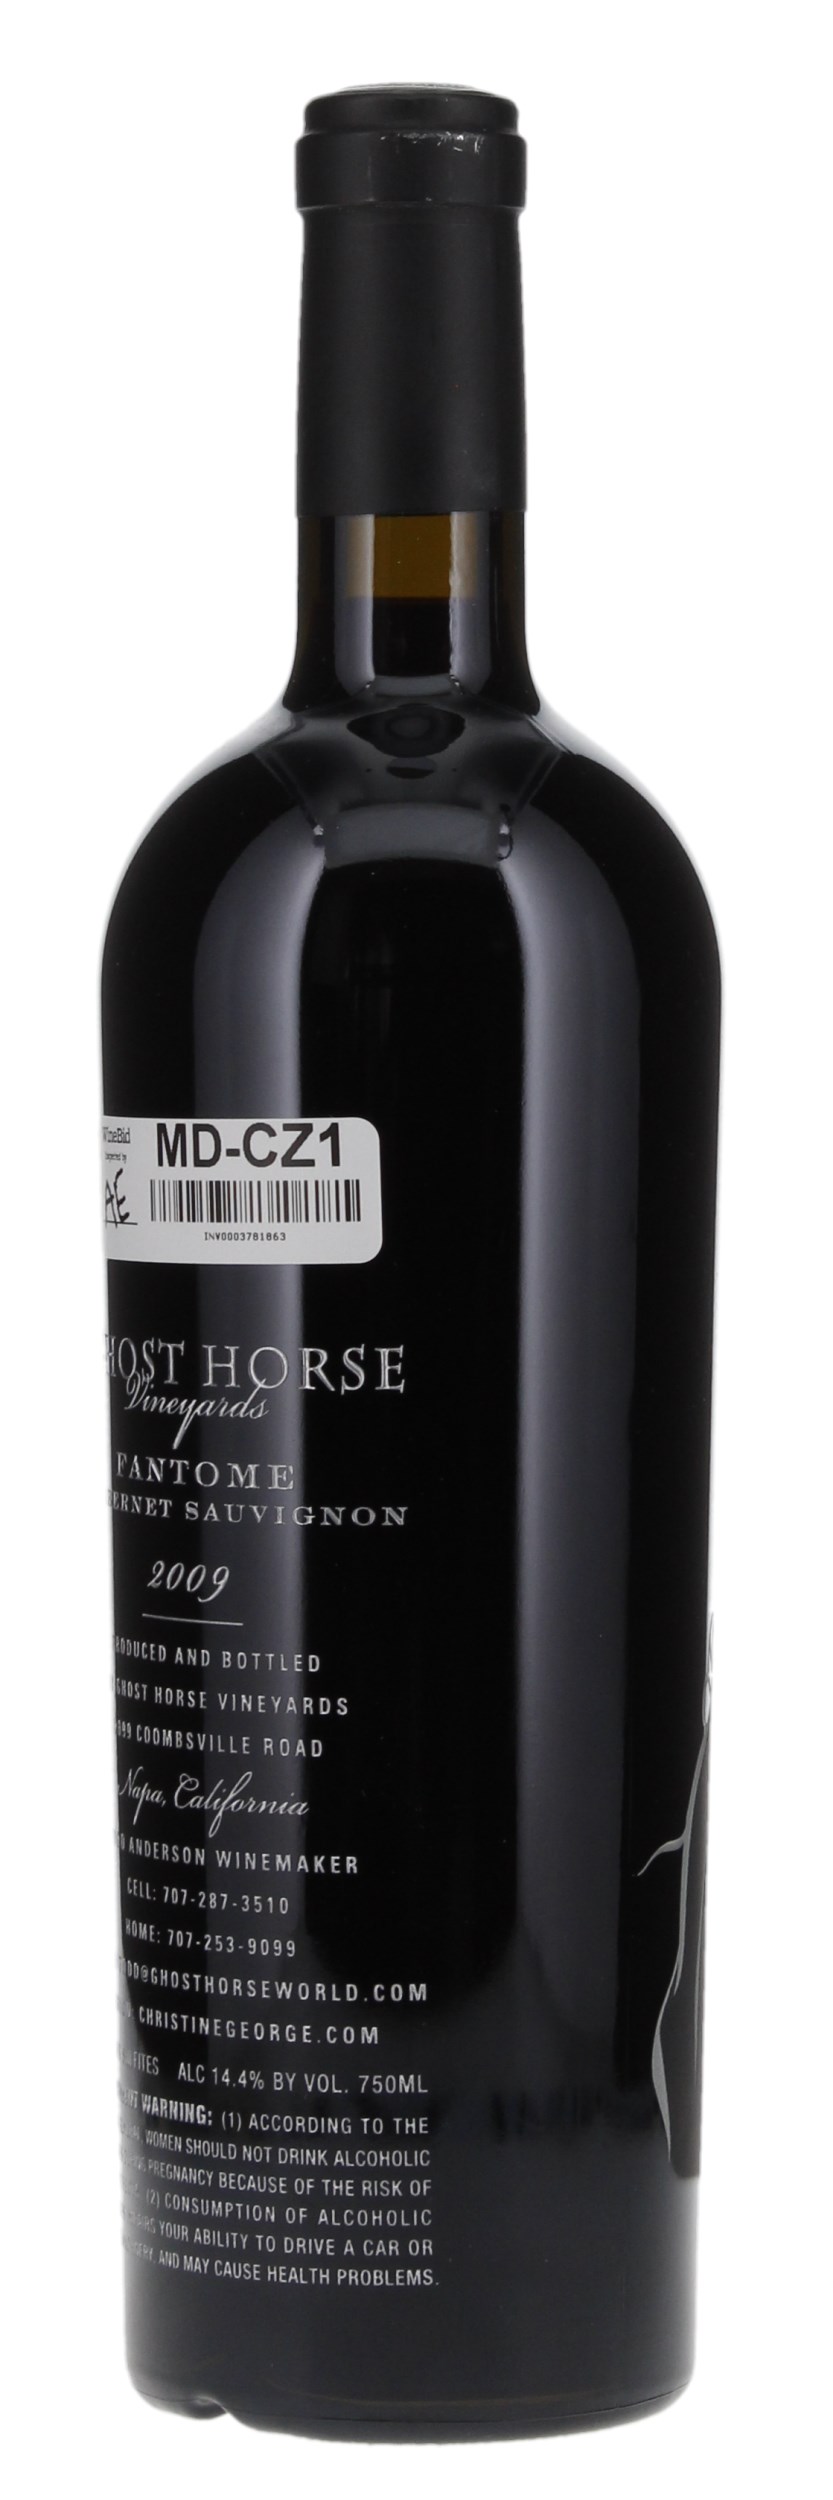 2009 Ghost Horse Vineyard Fantome Cabernet Sauvignon, 750ml